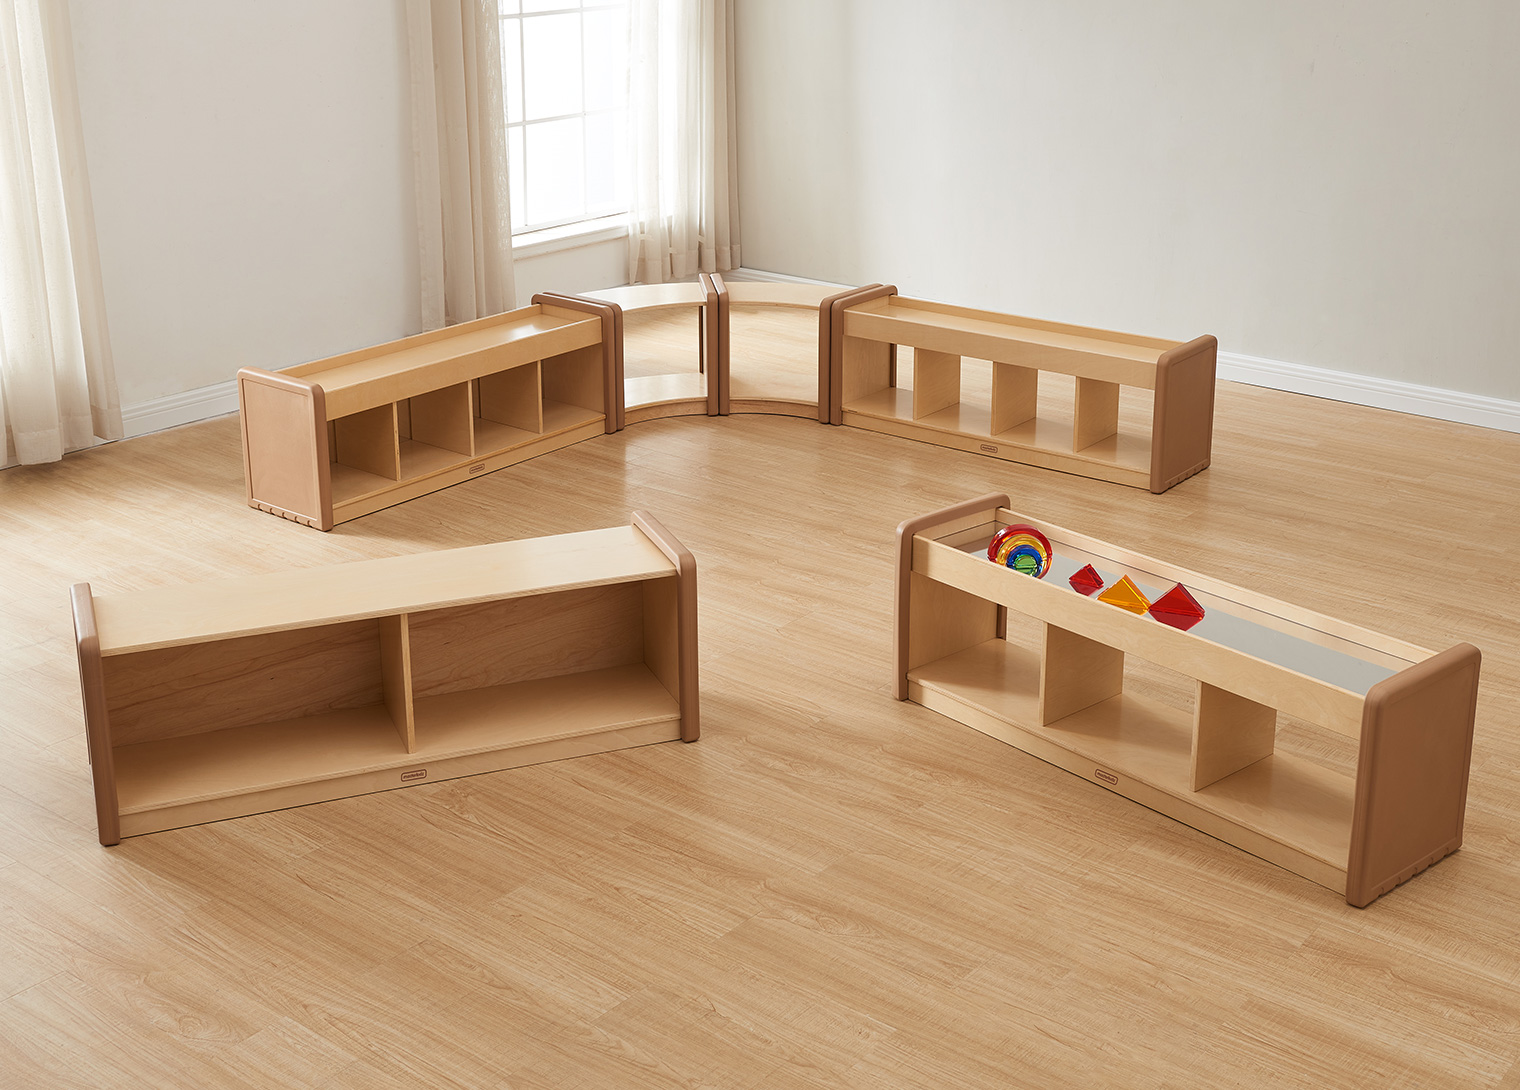 SoftEdge Toddler Play Center - Mirrored Back Shelving Unit